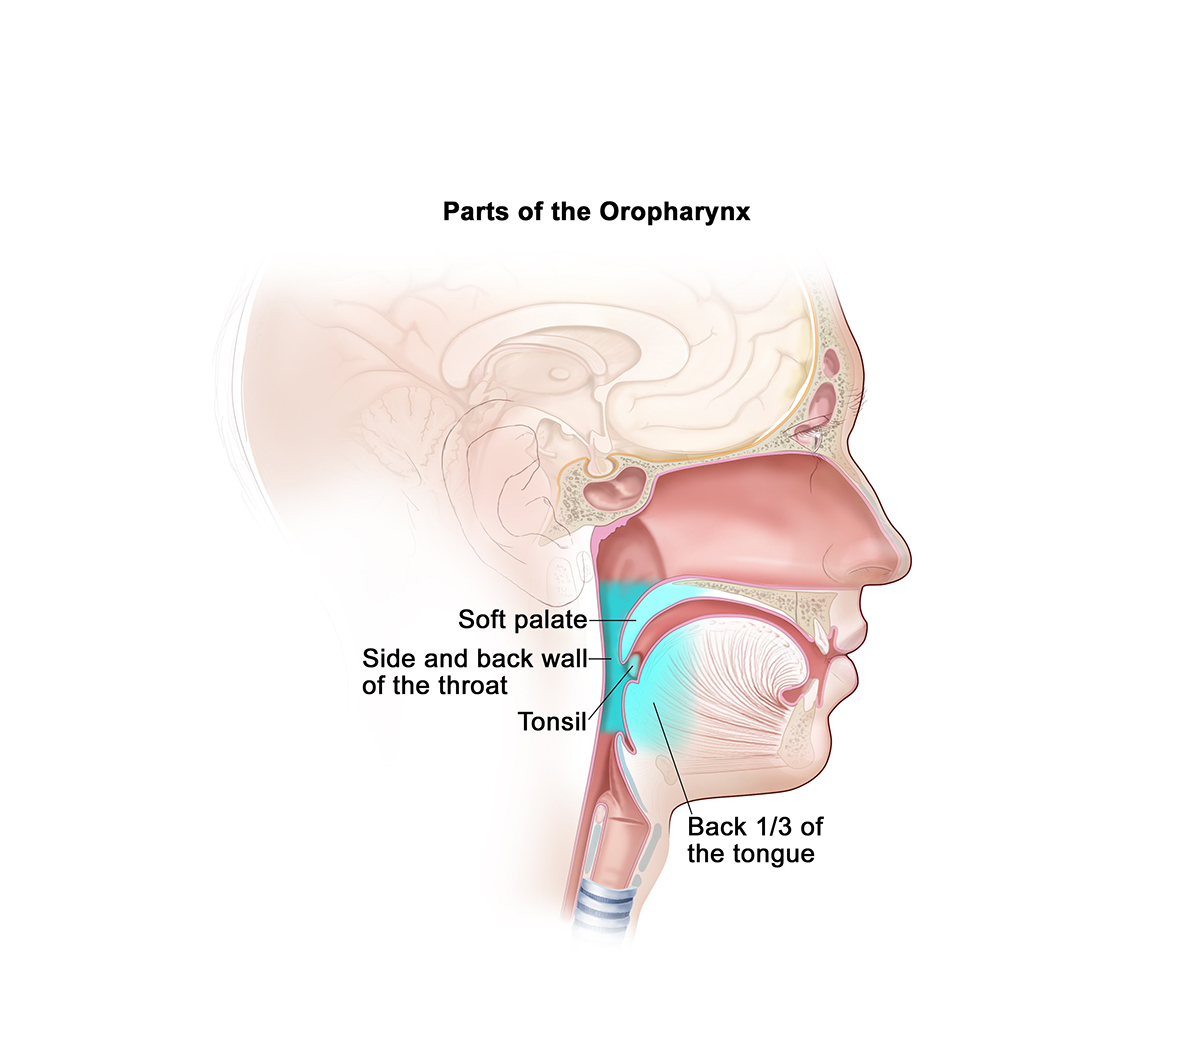 Anatomical illustration of the oropharynx.